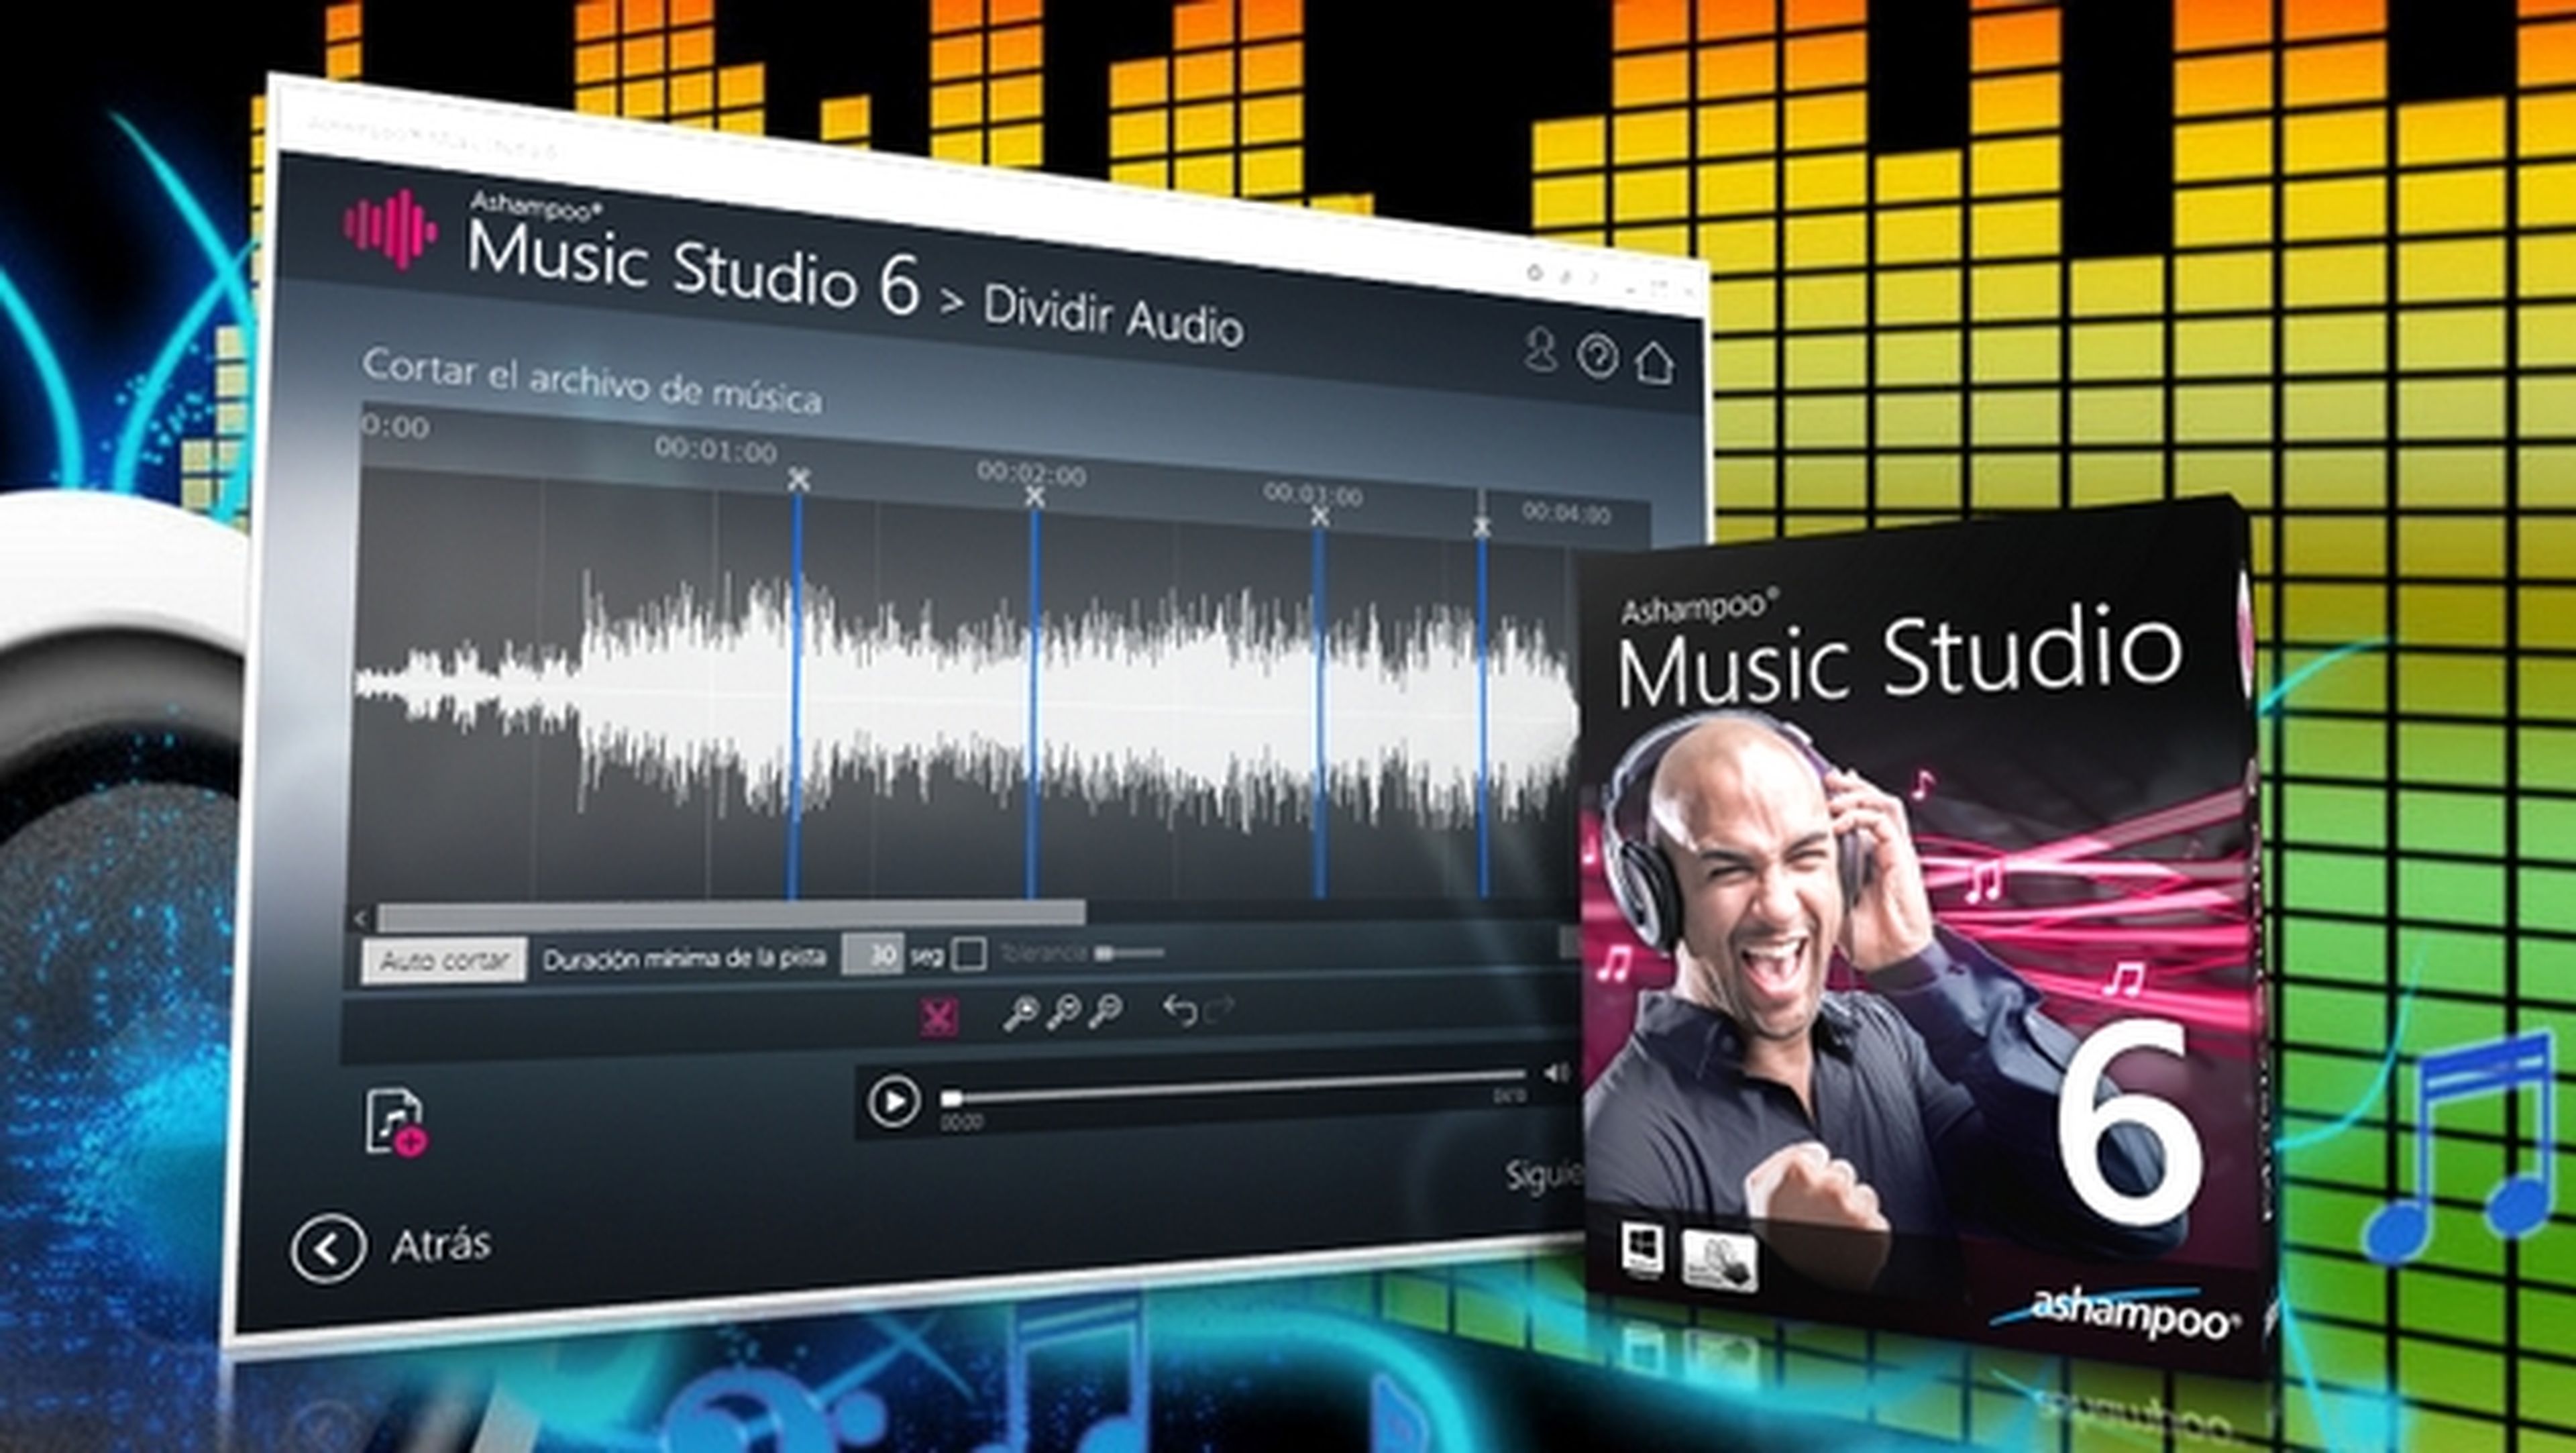 Ashampoo Music Studio 6, crea, edita, extrae, mezcla y produce tu propia música.